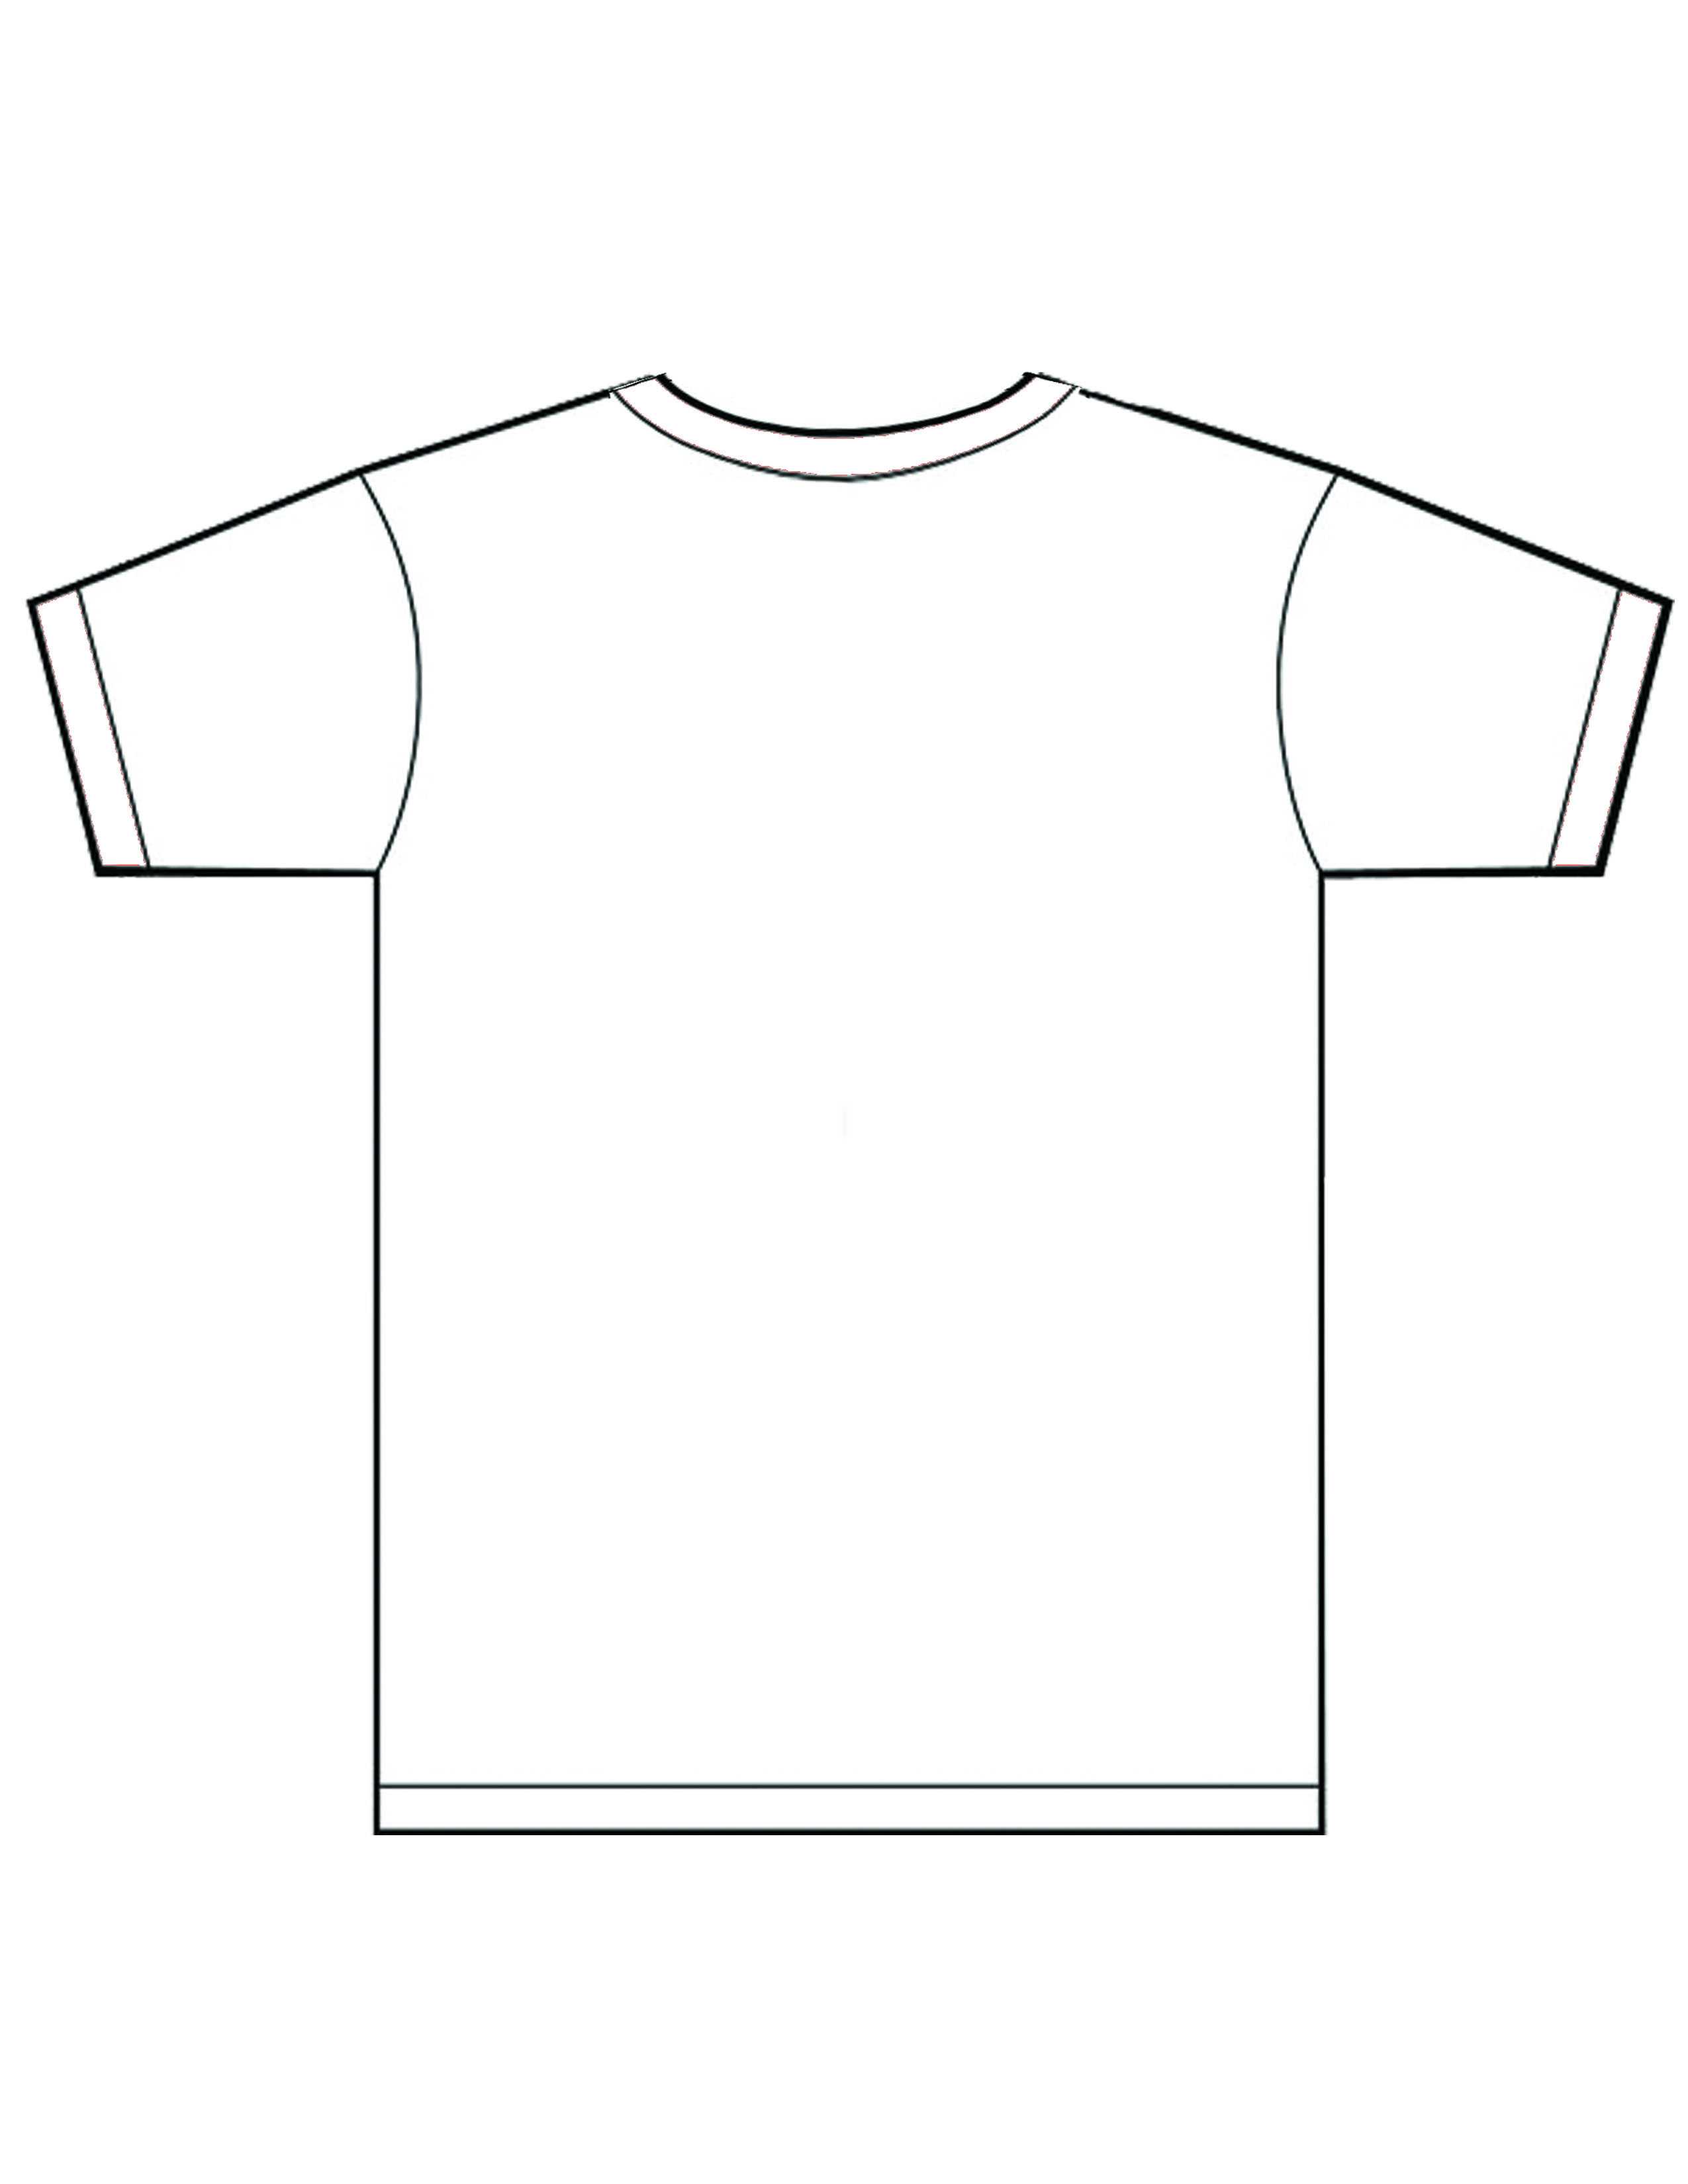 Blank T Shirts Template Photoshop | Rldm With Regard To Blank Tee Shirt Template